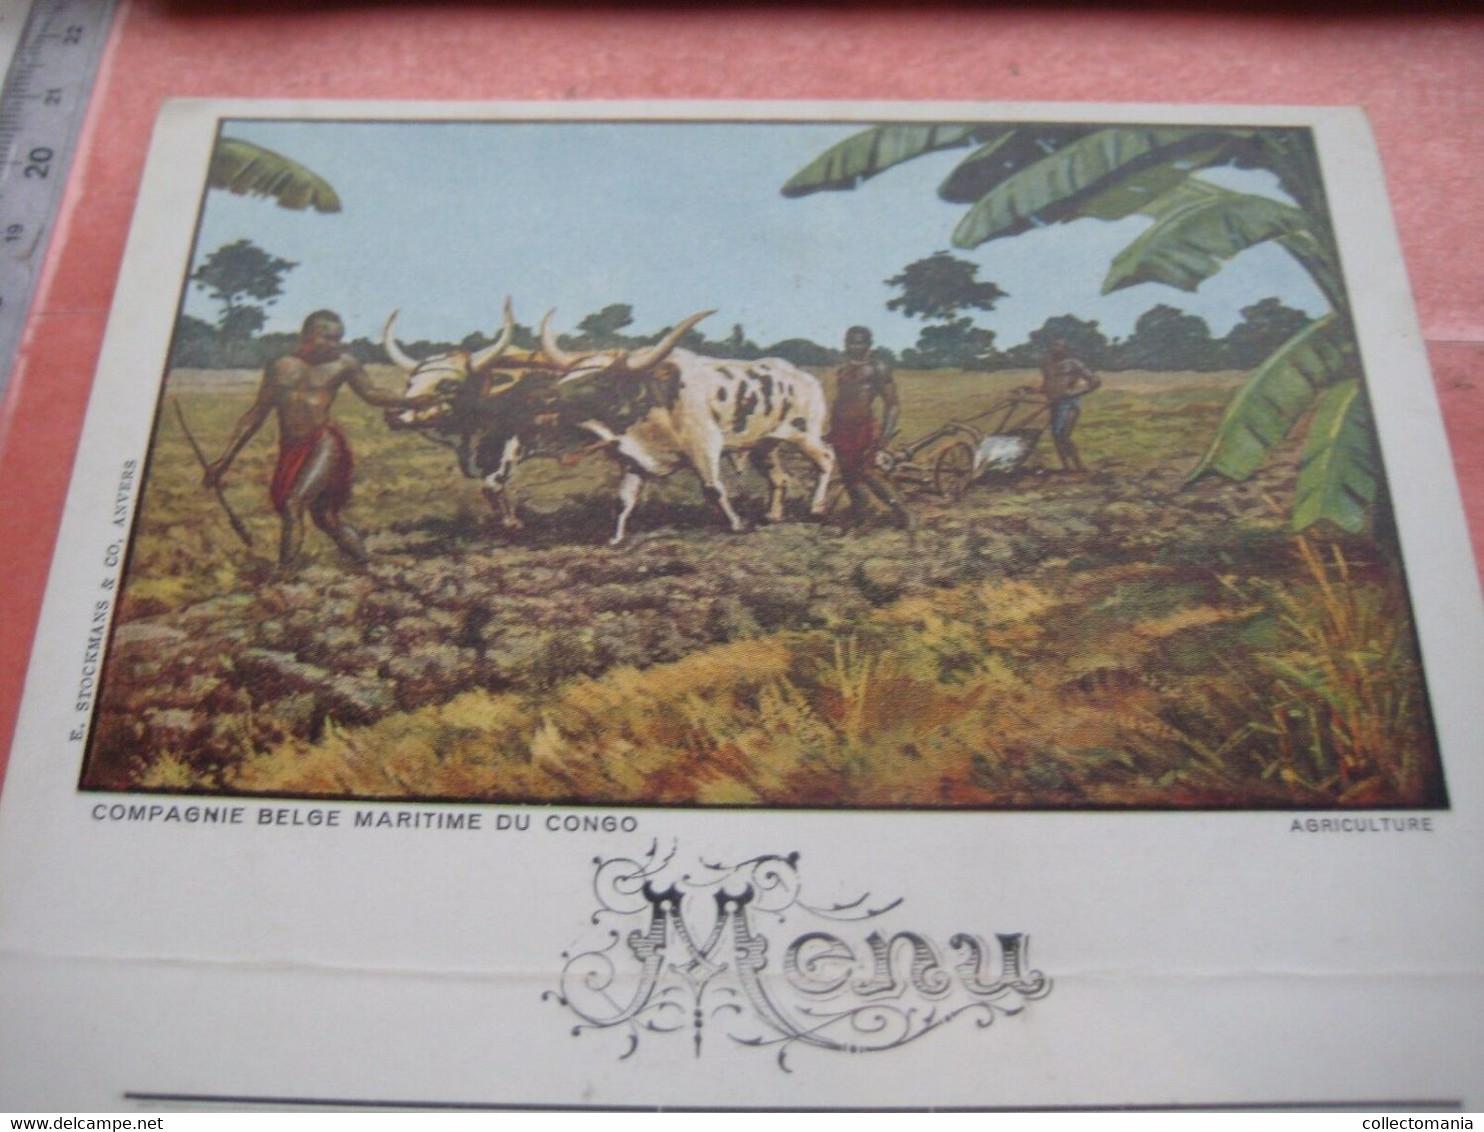 Authentic Menu Card, 8 November 1928 Congo Boat ANVERSVILLE, COWS Agriculture, First Class Kongo Etnisch - Menus